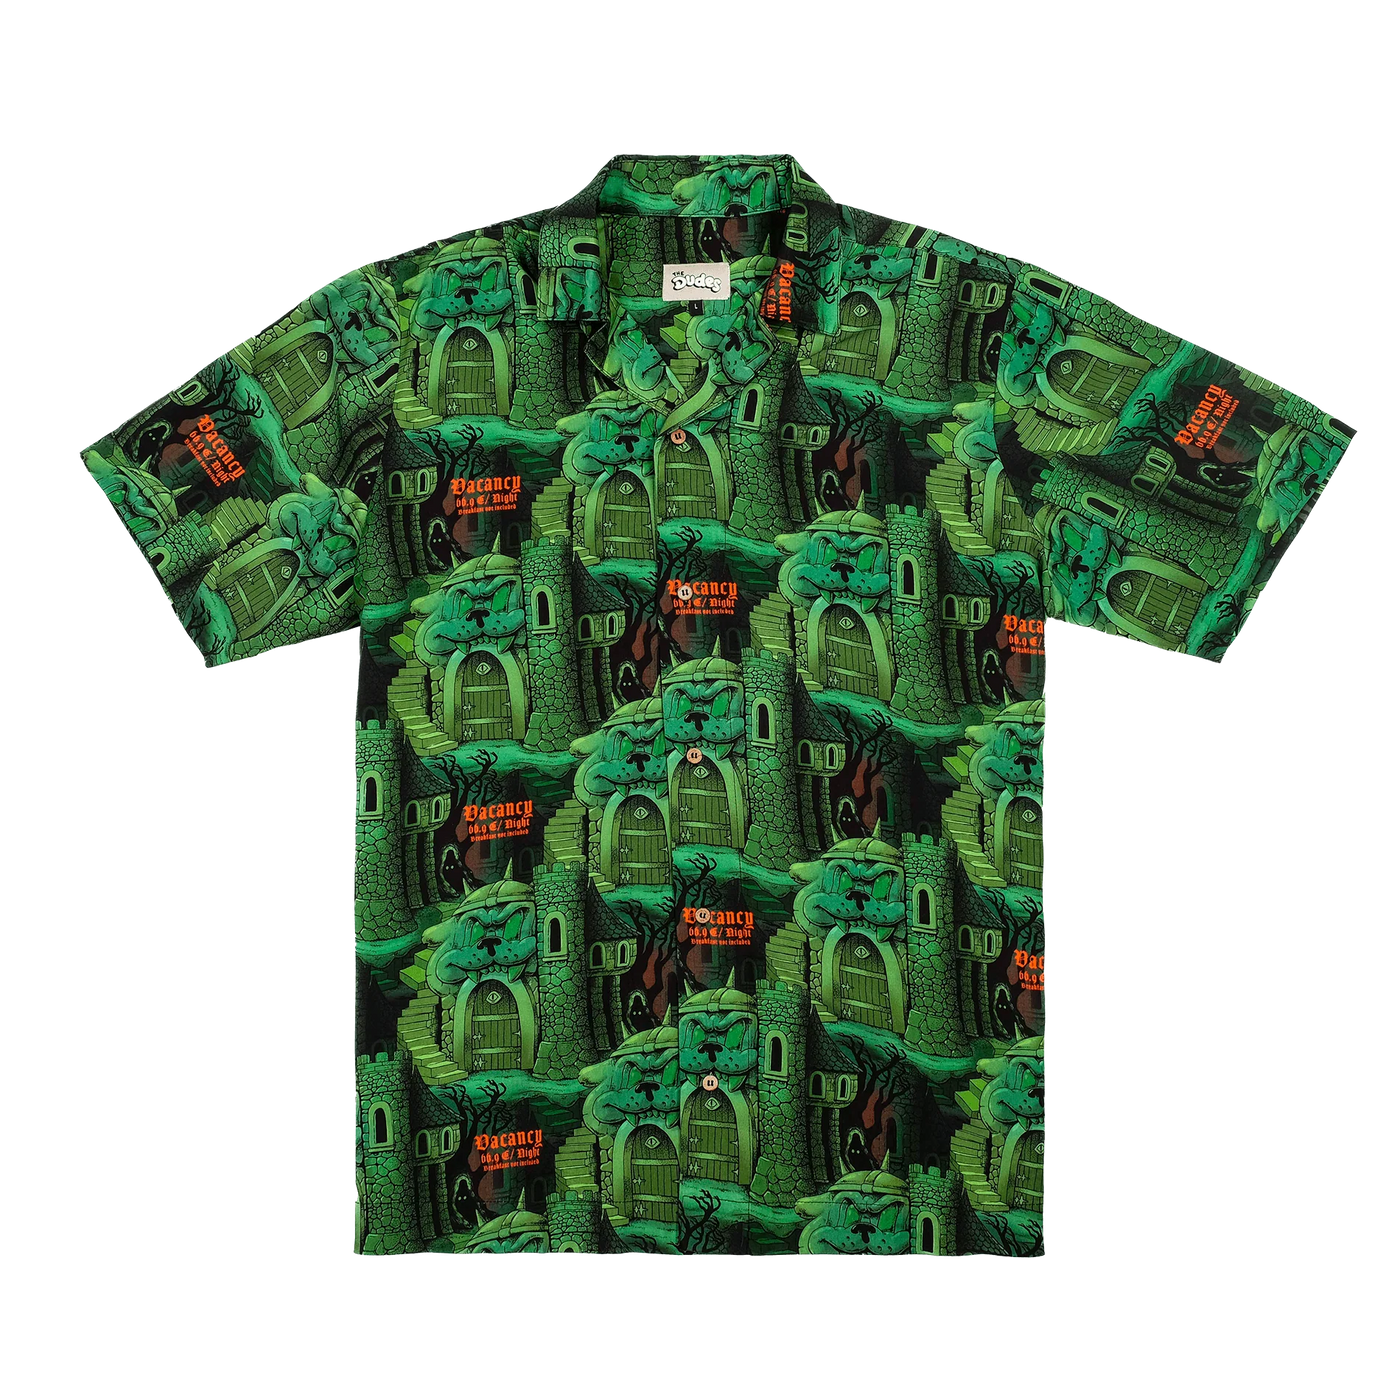 The Dudes Mortel Shirt - Green